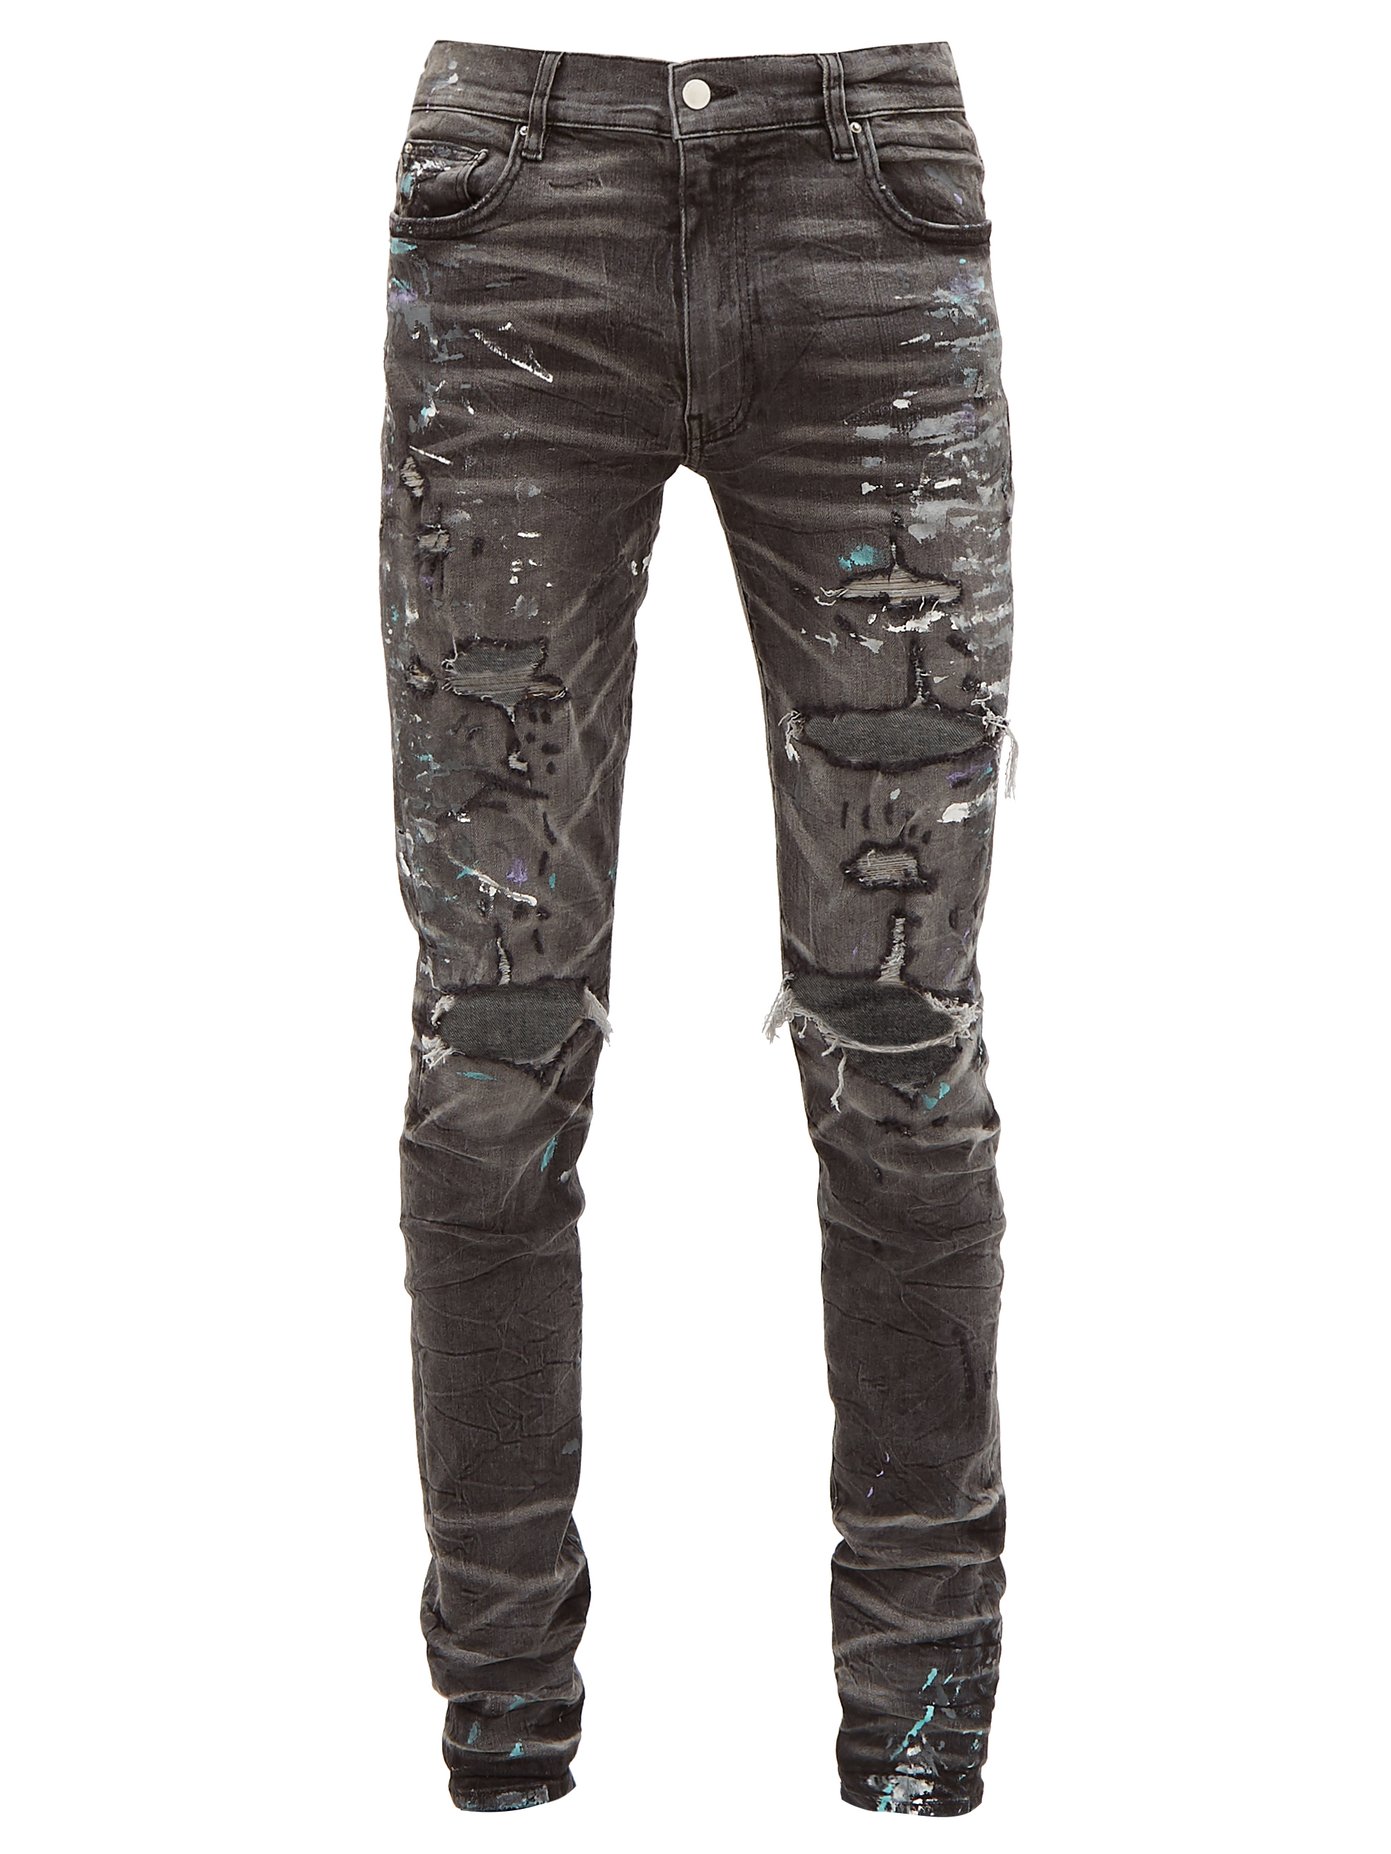 grey paint splatter jeans mens